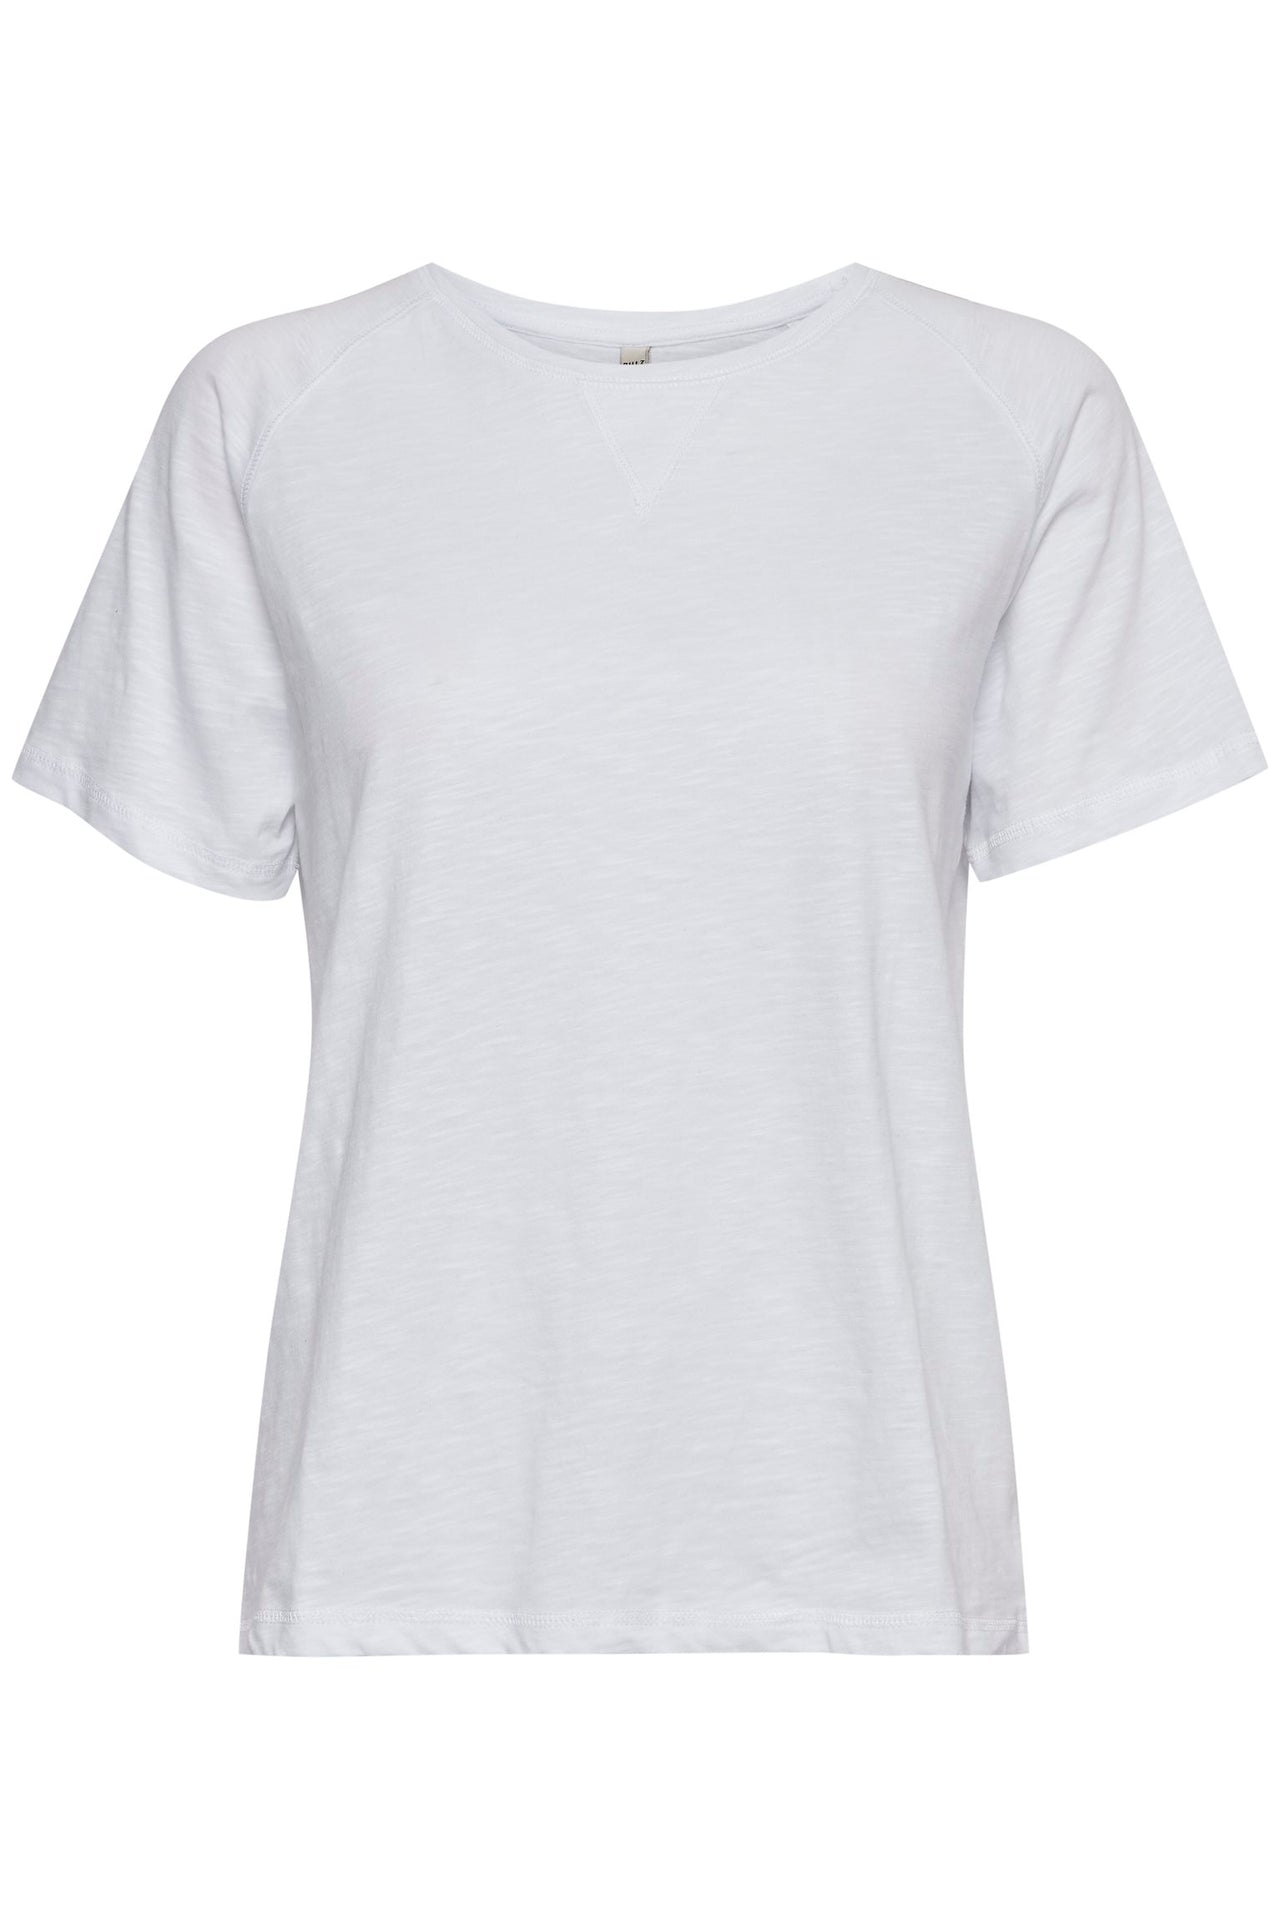 Pulz Brit T-Shirt - Bright White